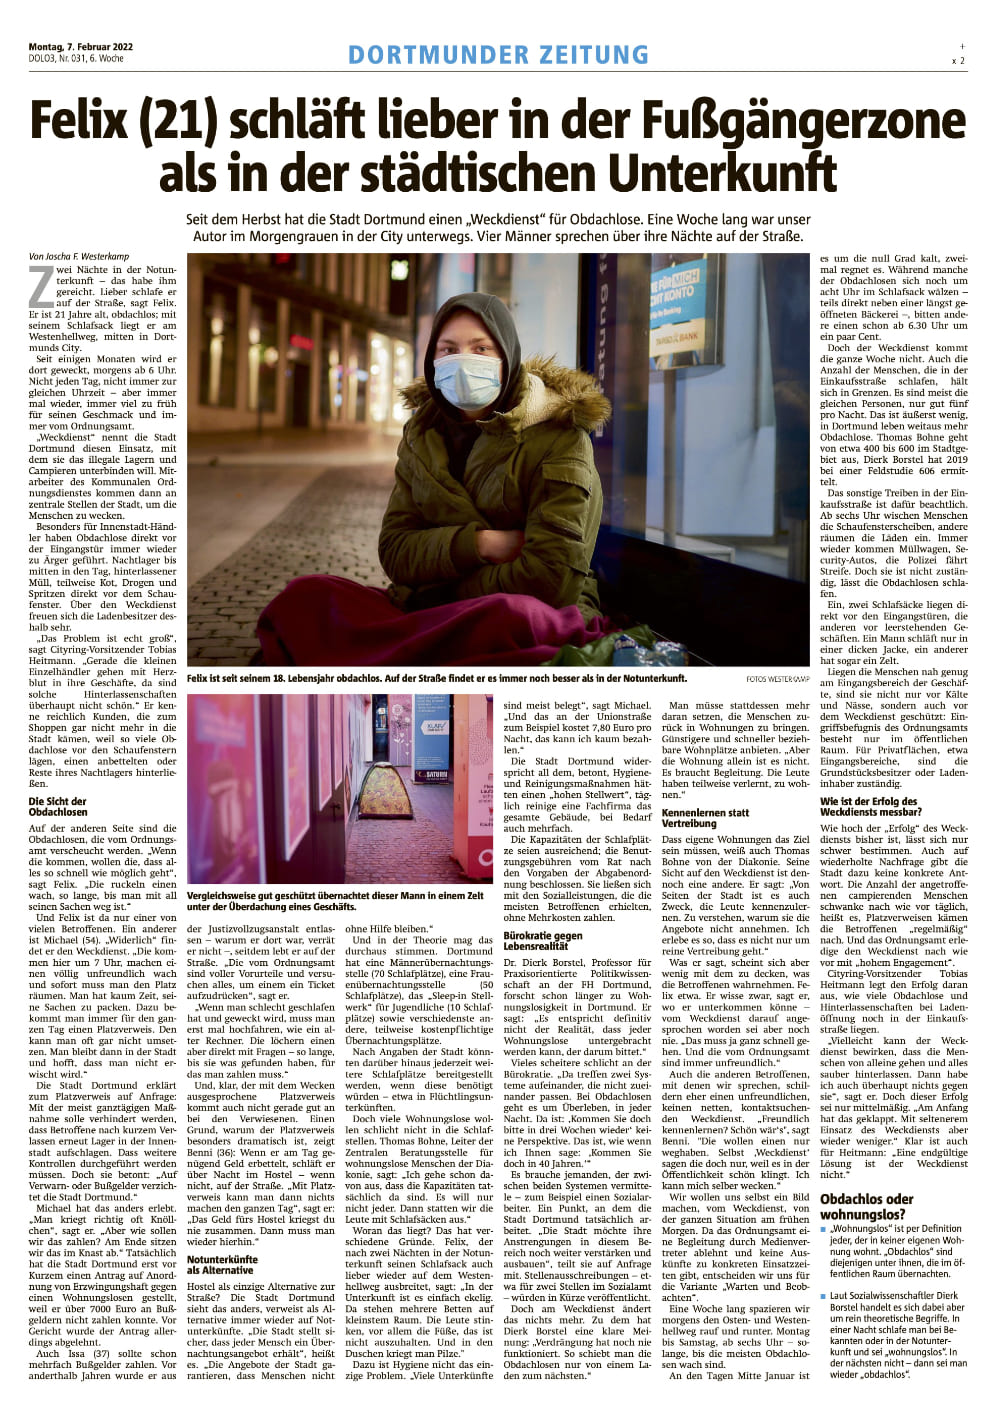 Zeitung-Artikel aus den Ruhr-Nachrichten – Joscha F. Westerkamp